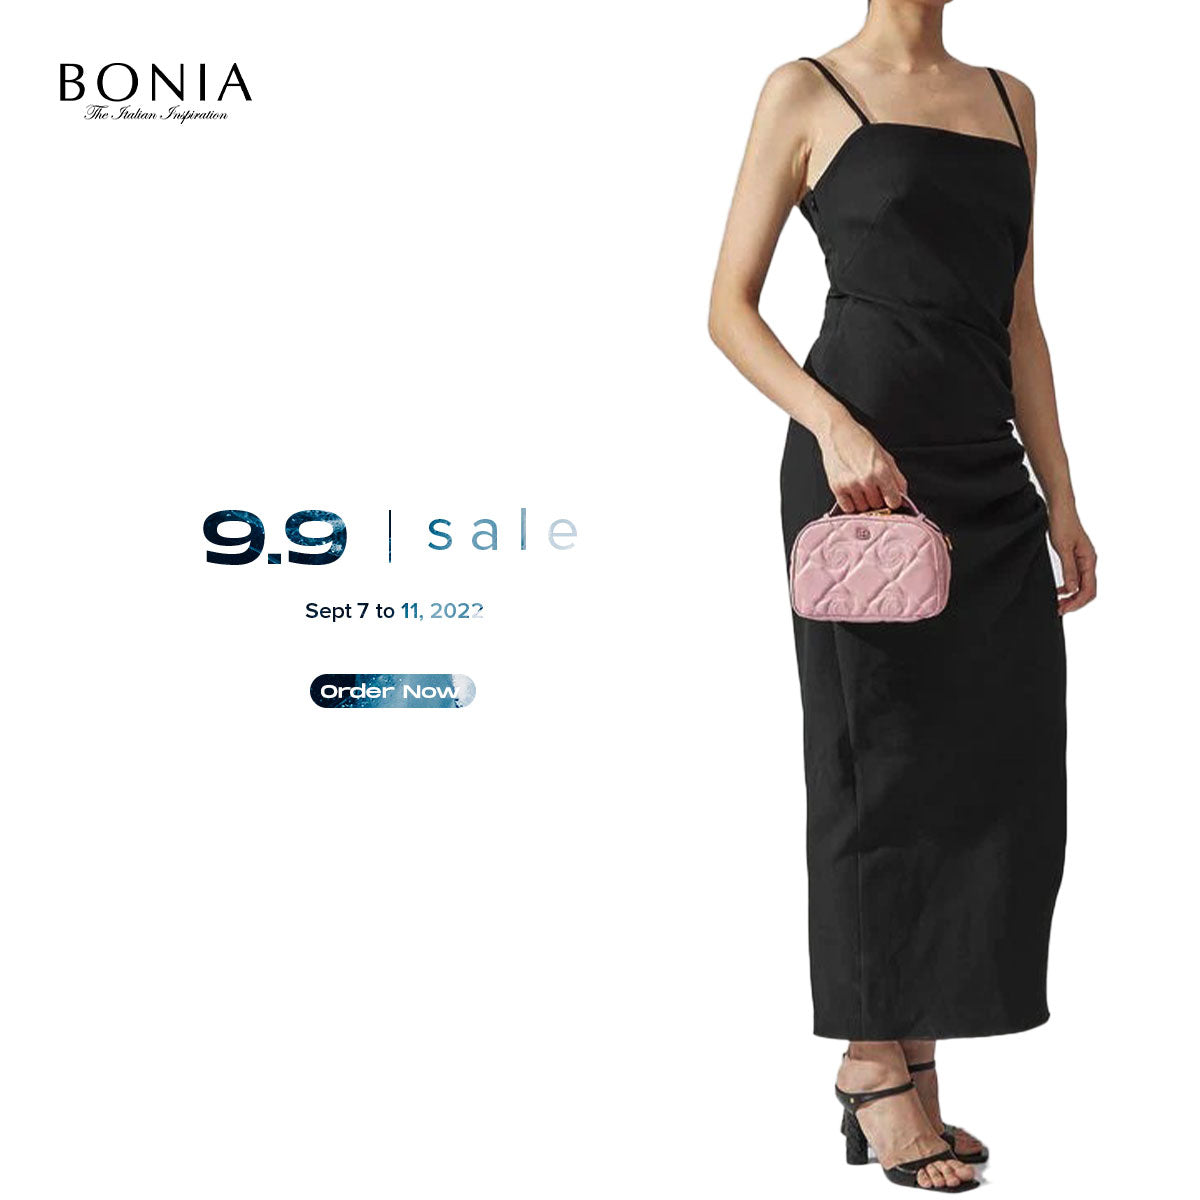 Bonia Gianna Shoulder Bag 860374-202-07